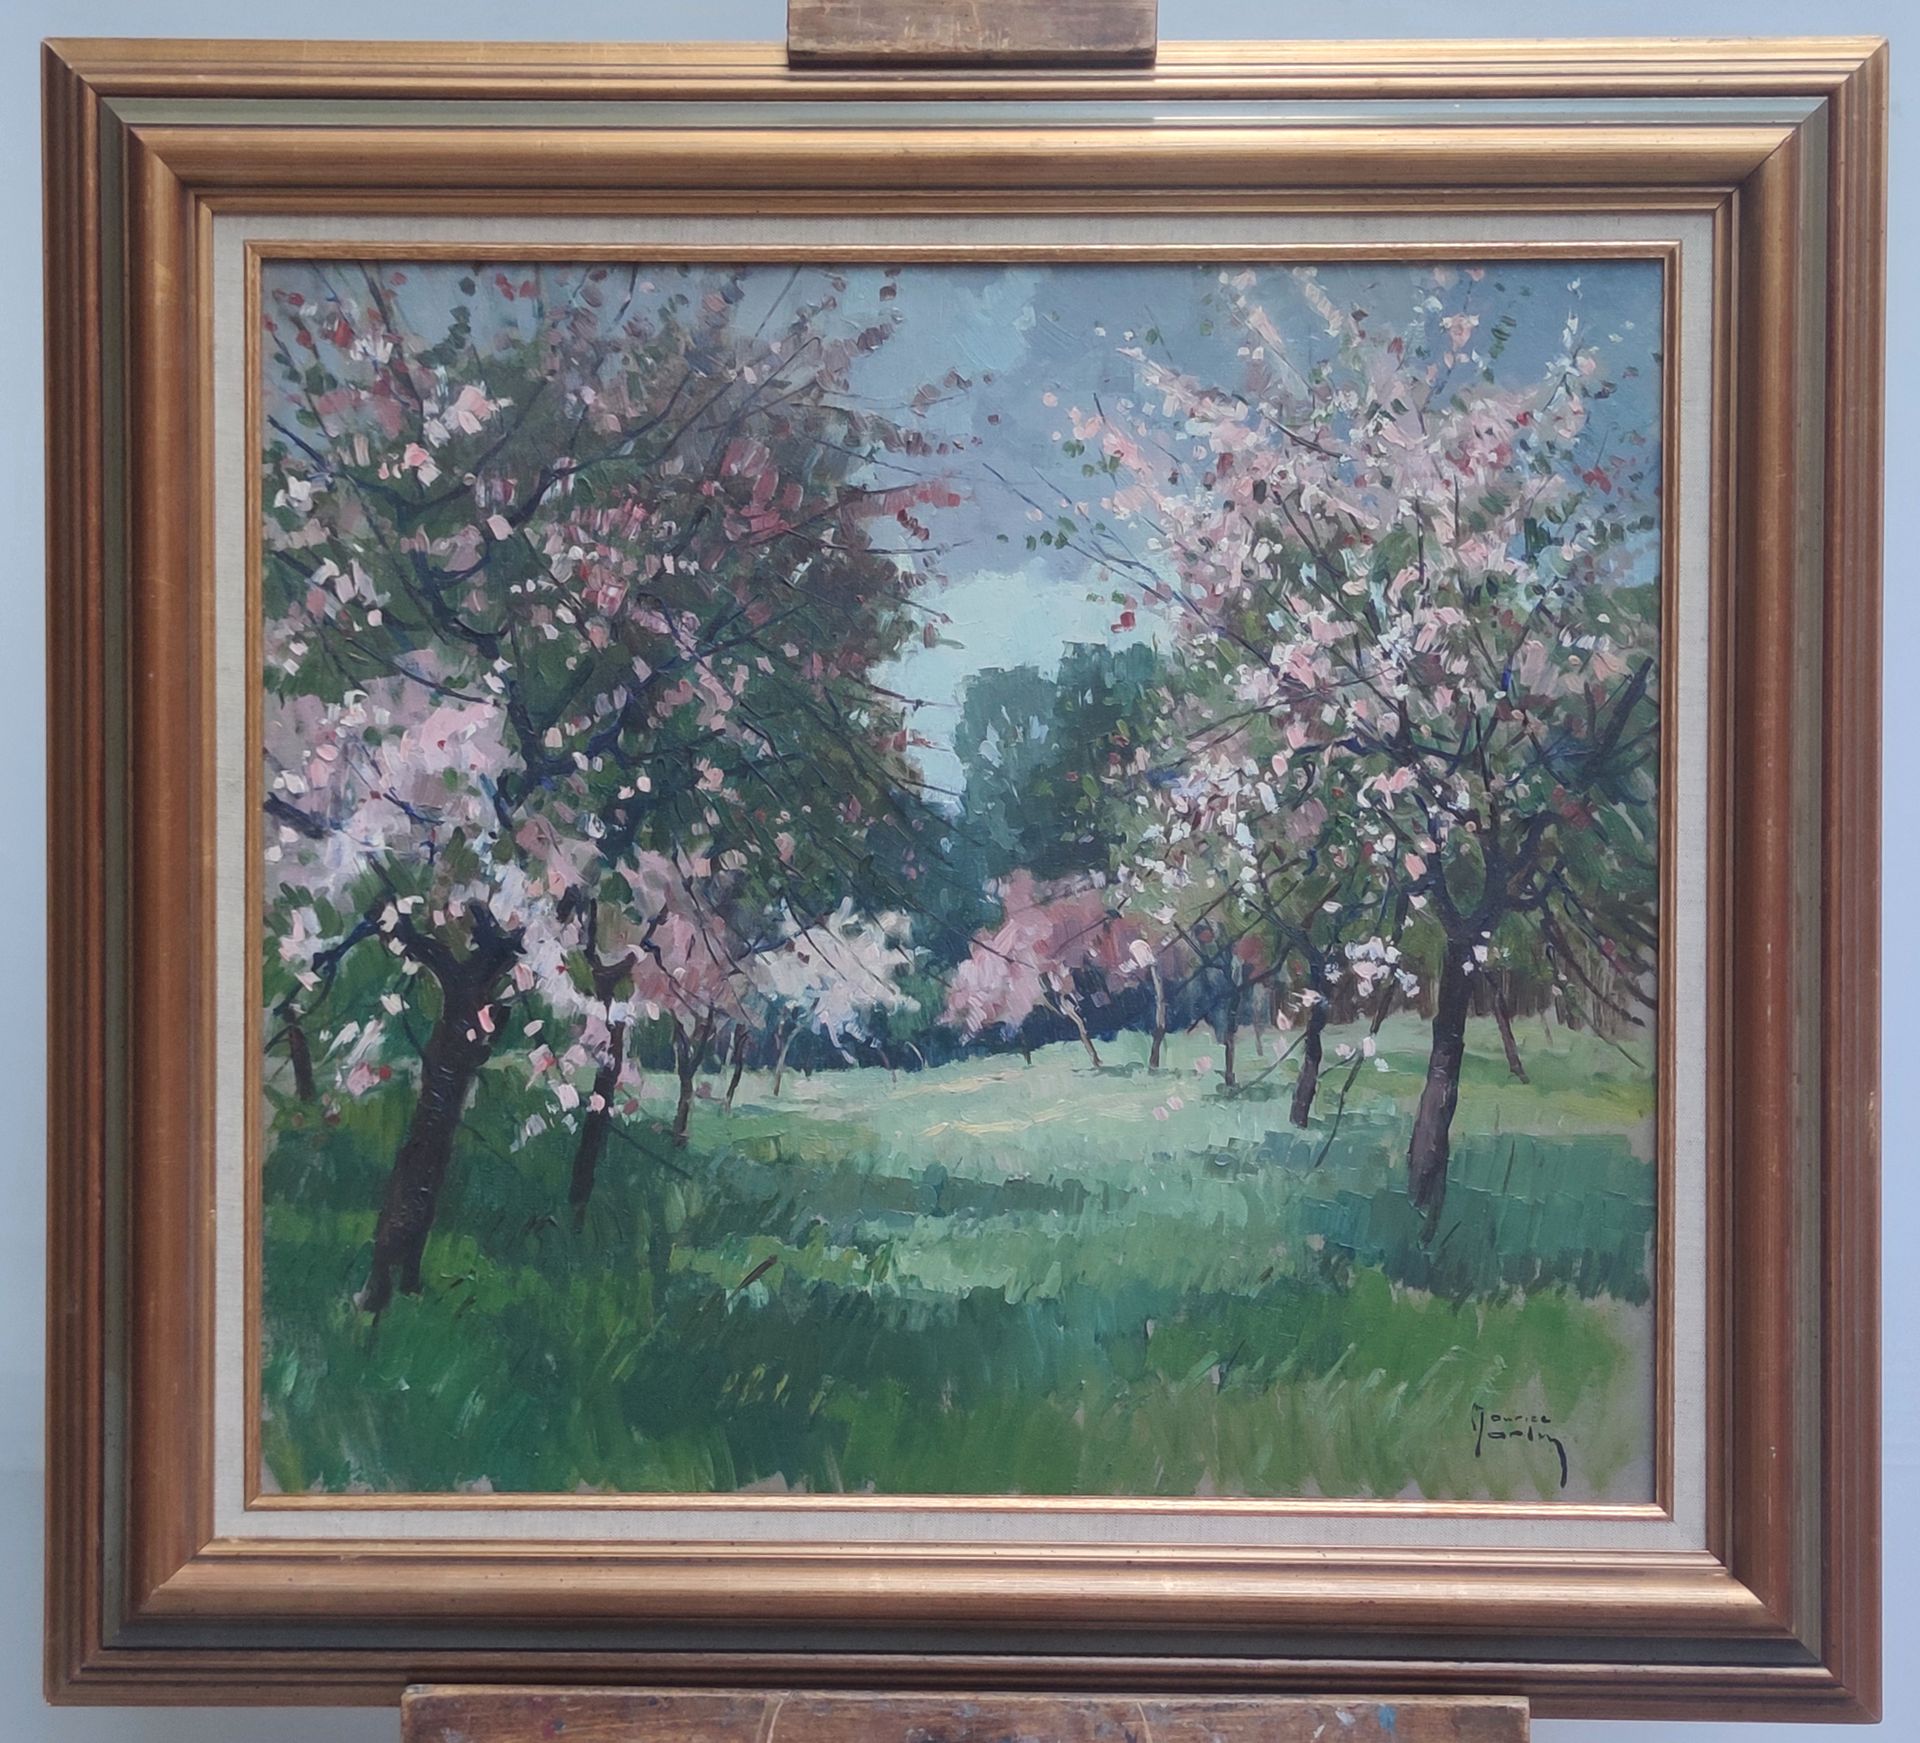 Null 
莫里斯-马丁 (1894-1978)

果园

布面油画，右下角有签名

65 X 73厘米

出处：加来拍卖会，1994年3月，皮荣先生